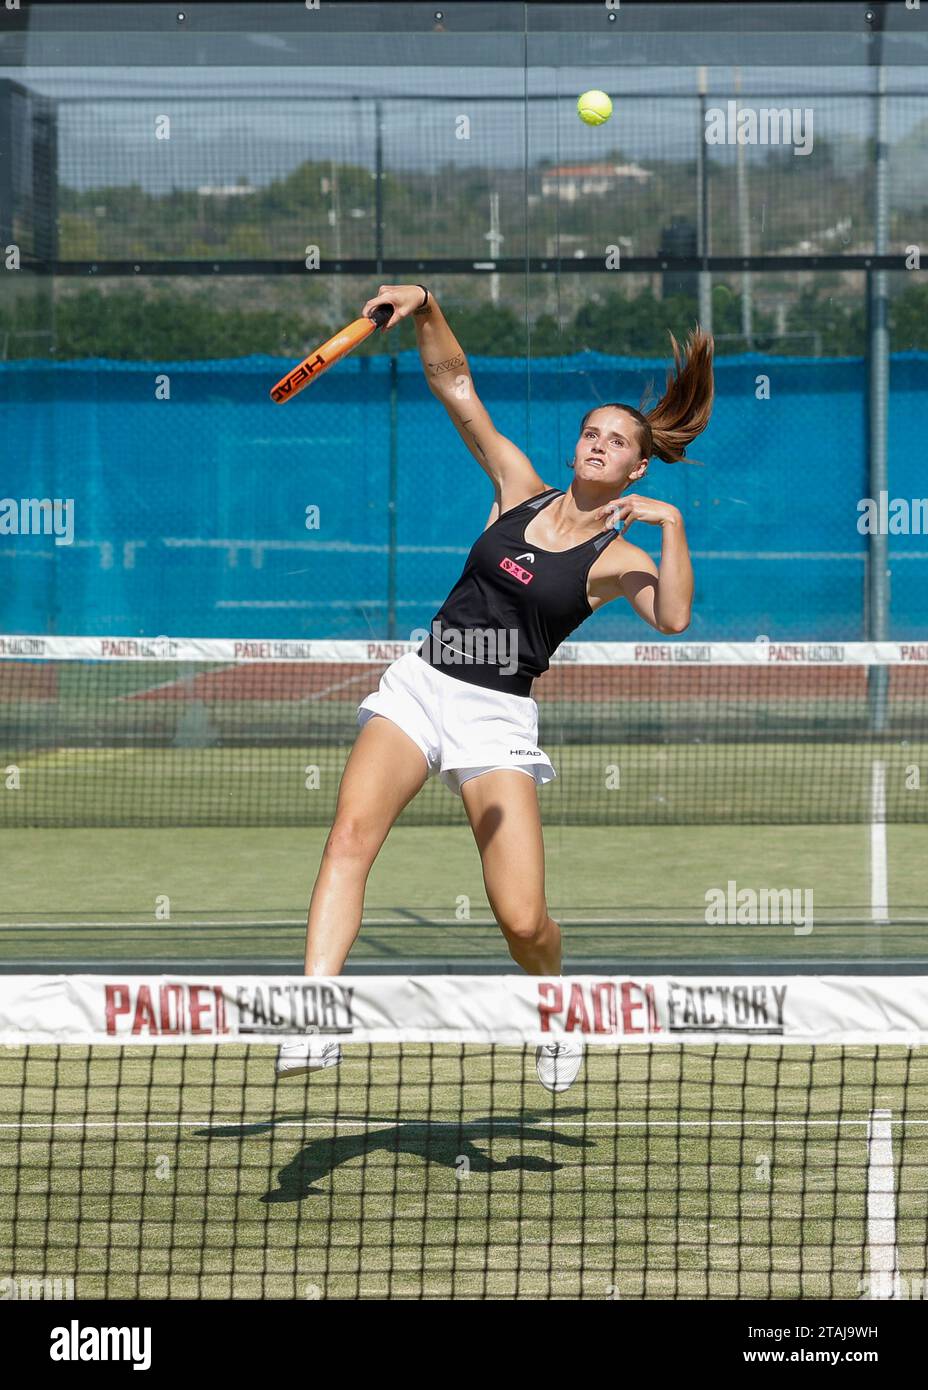 Young woman playing padel tennis. Stock Photo